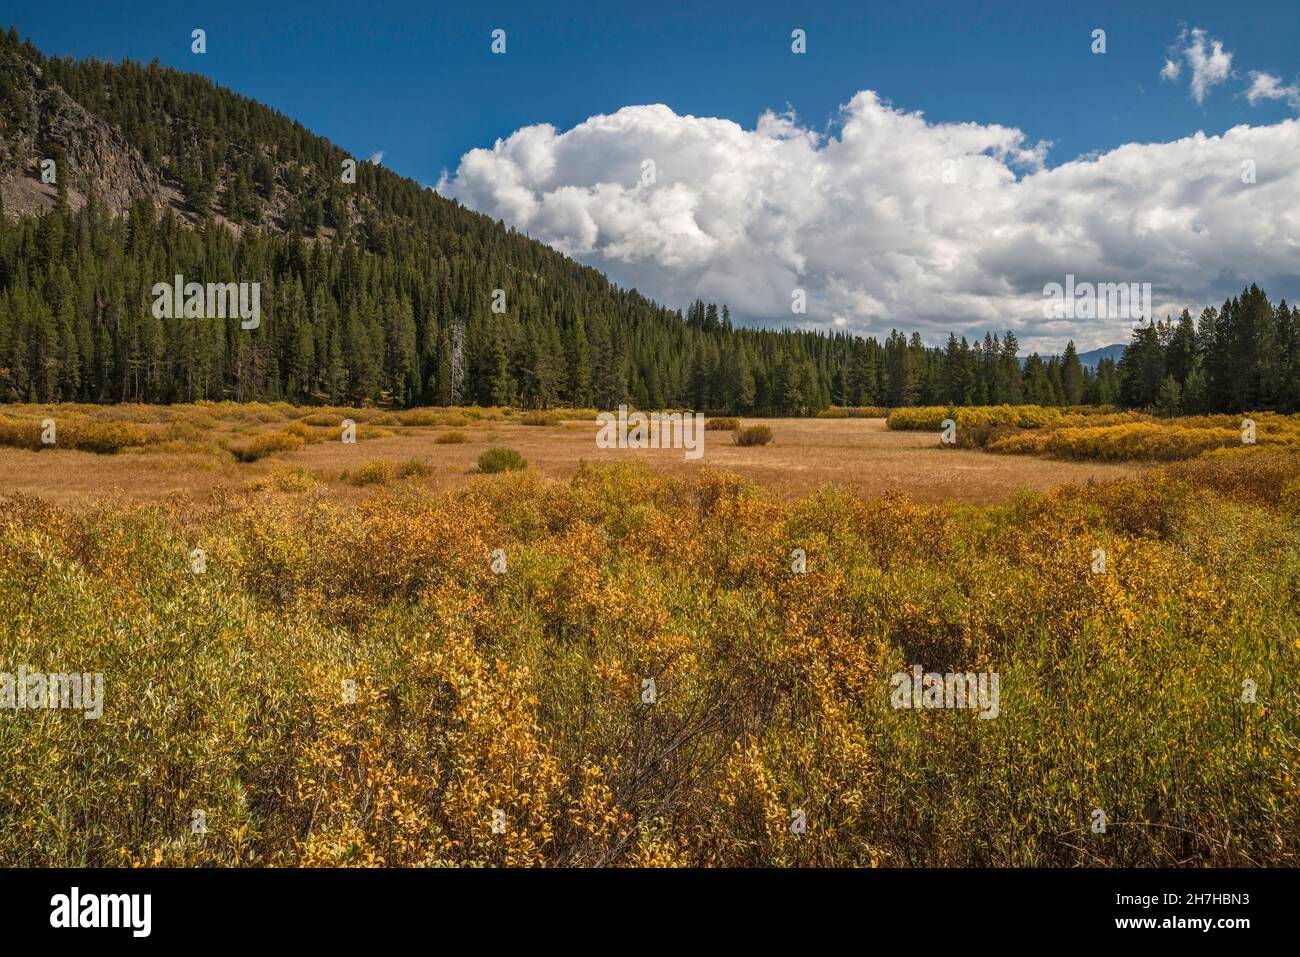 Herbstfärbung Weidensträucher in nasser Wiese, Glade Creek Valley, grasige Lake Road, John D. Rockefeller Memorial Parkway Protected Area, Wyoming, USA Stockfoto